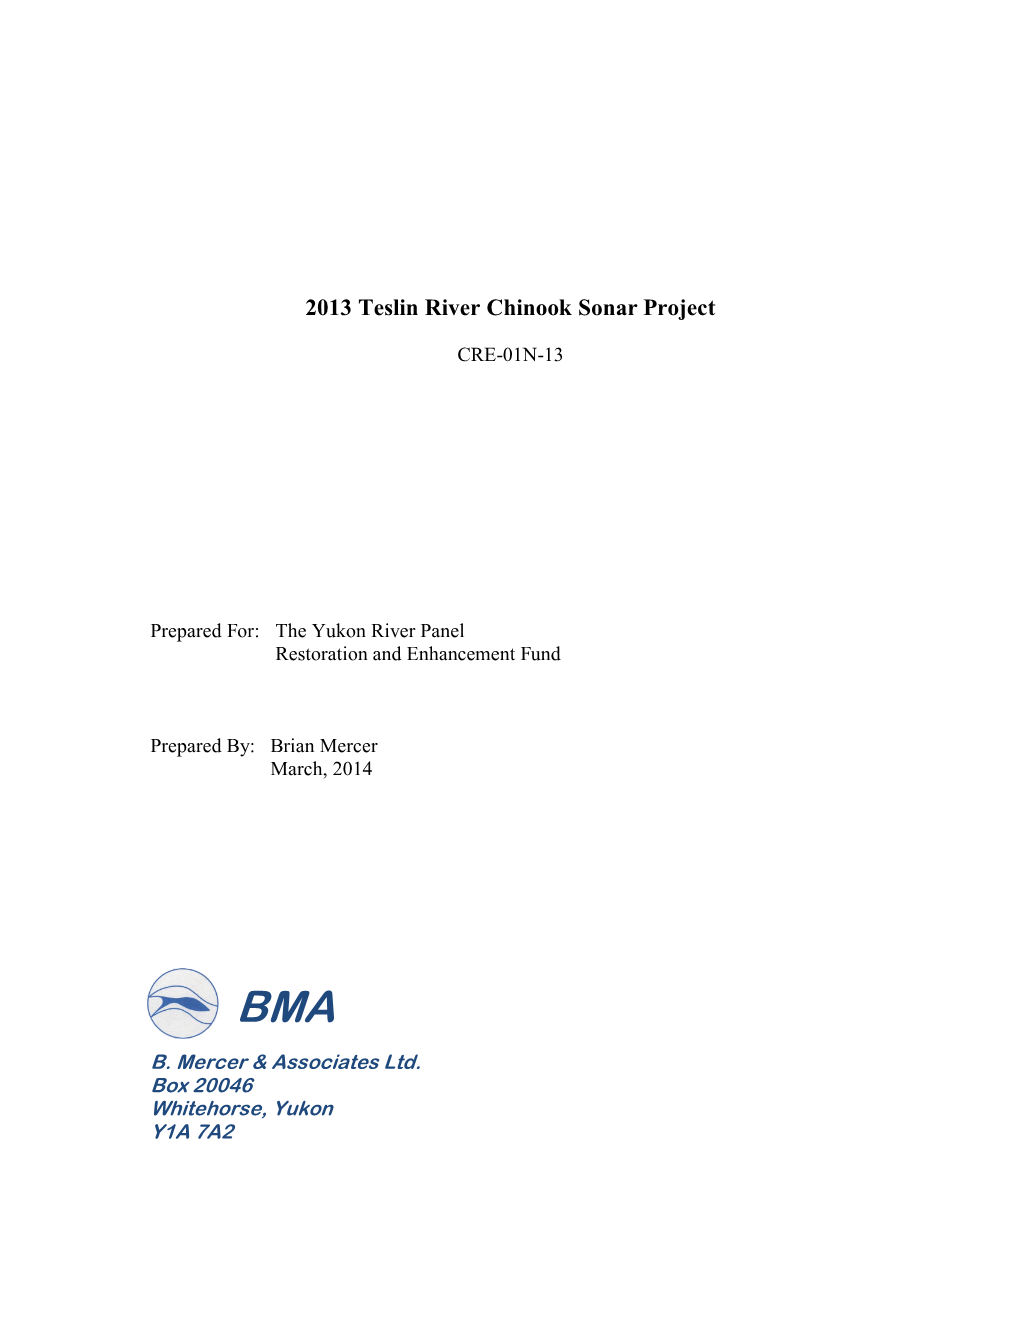 2009 Klondike River DIDSON Sonar Feasibility Study